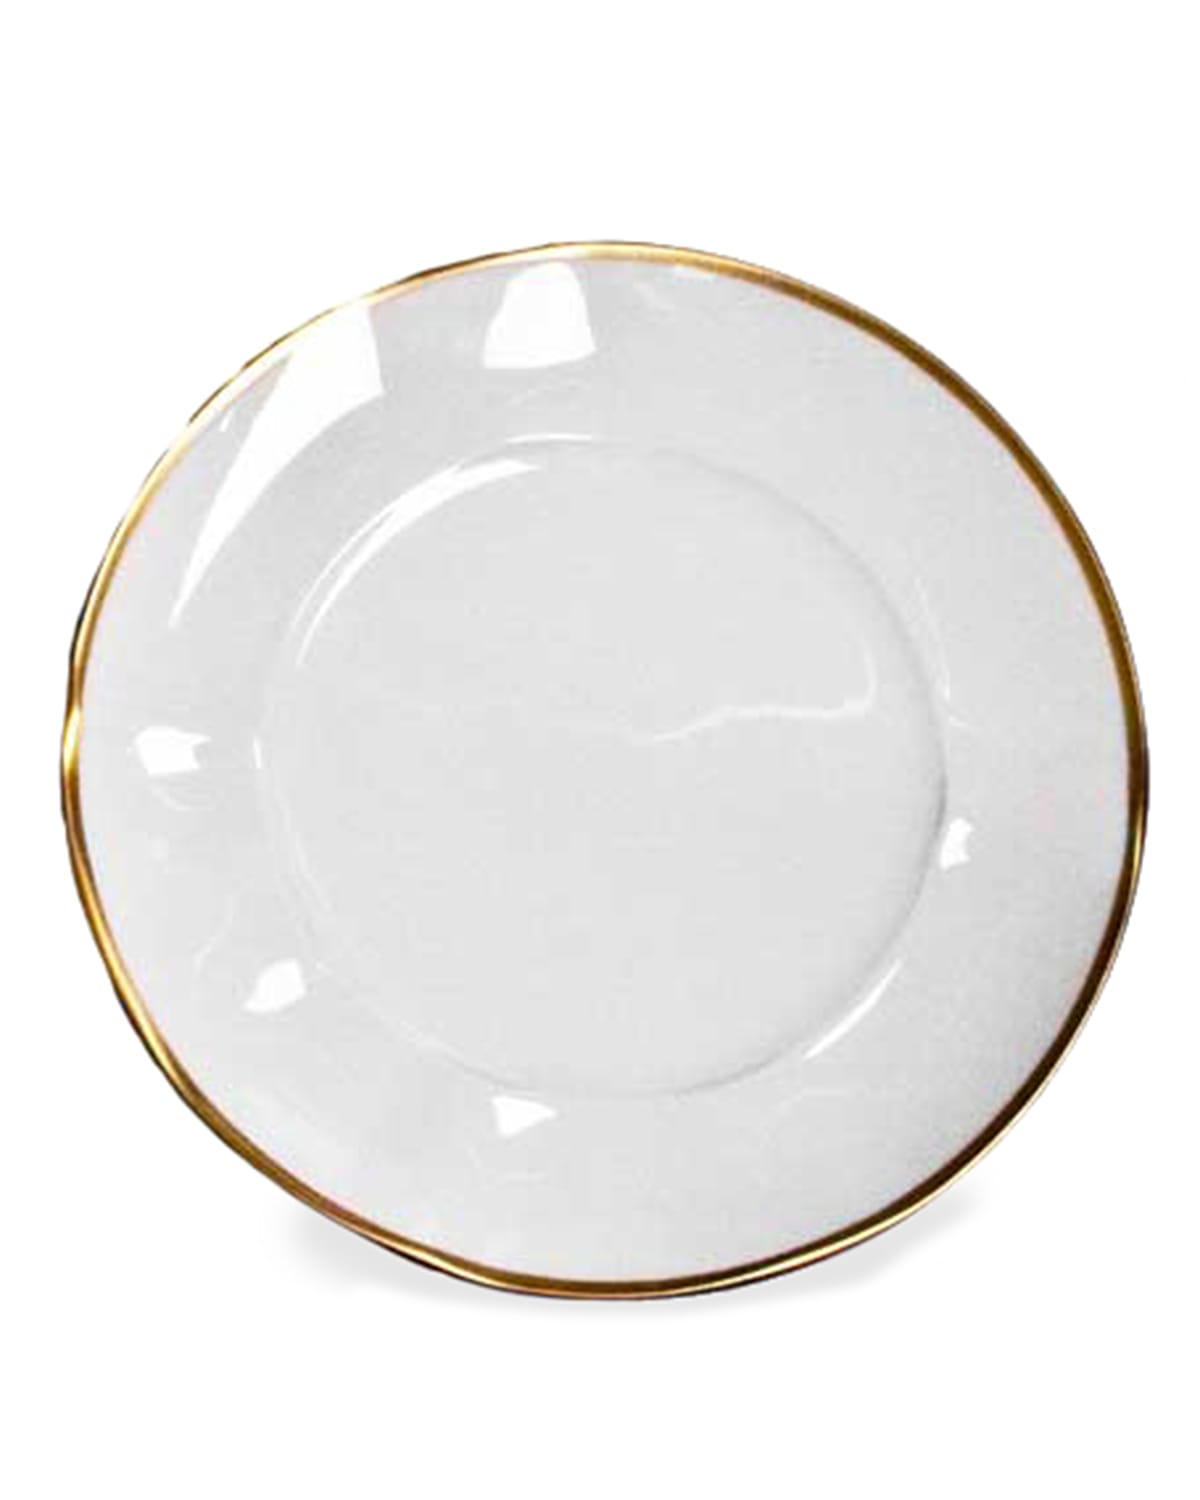 Simply Elegant Salad Plate